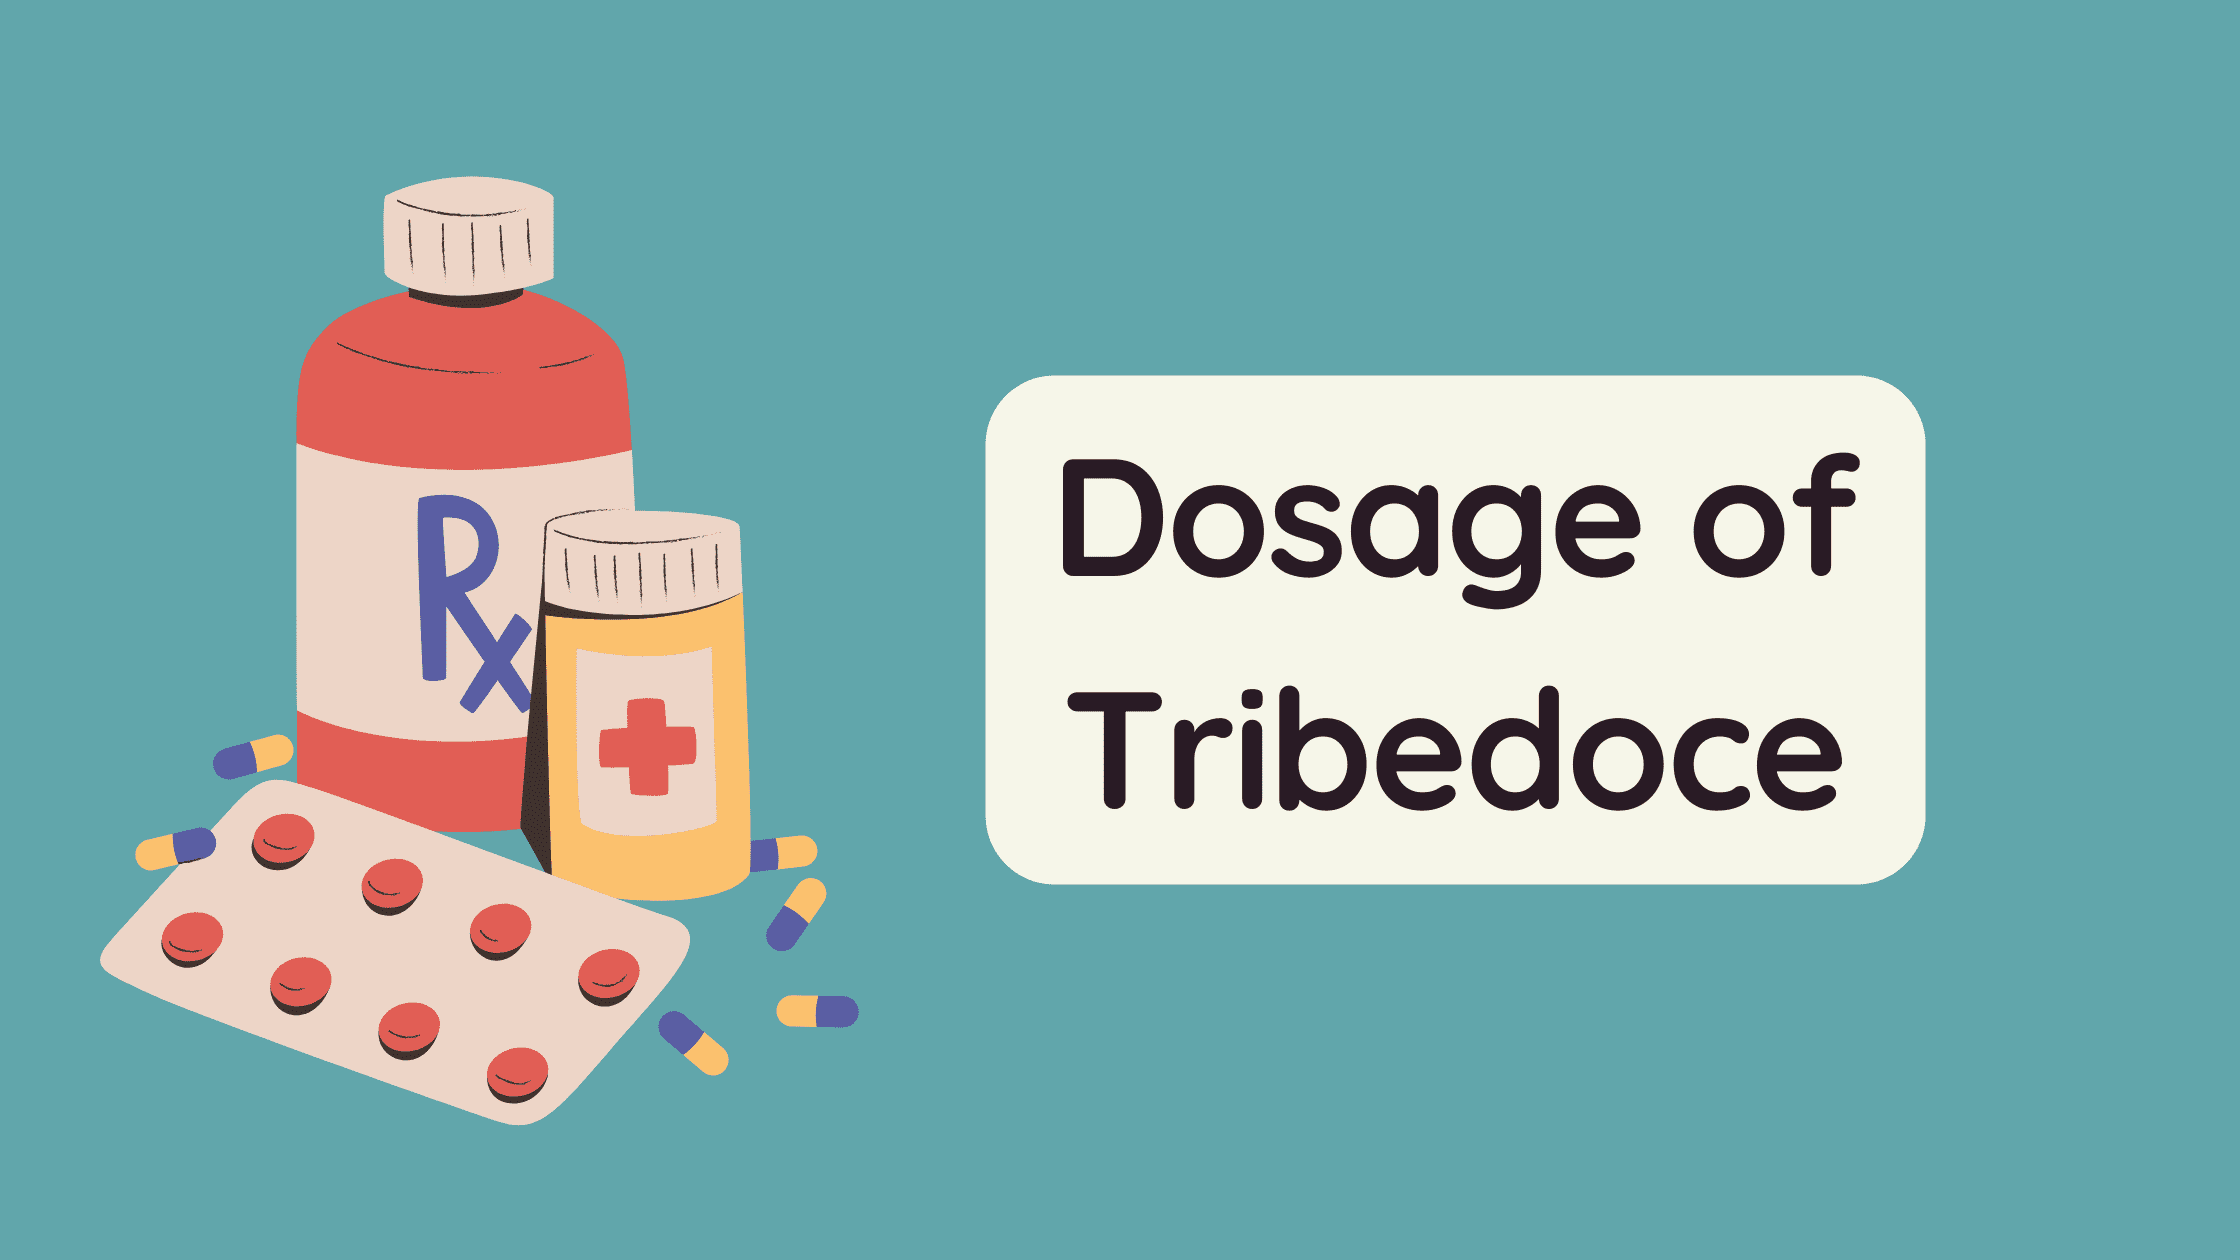 Dosage of Tribedoce